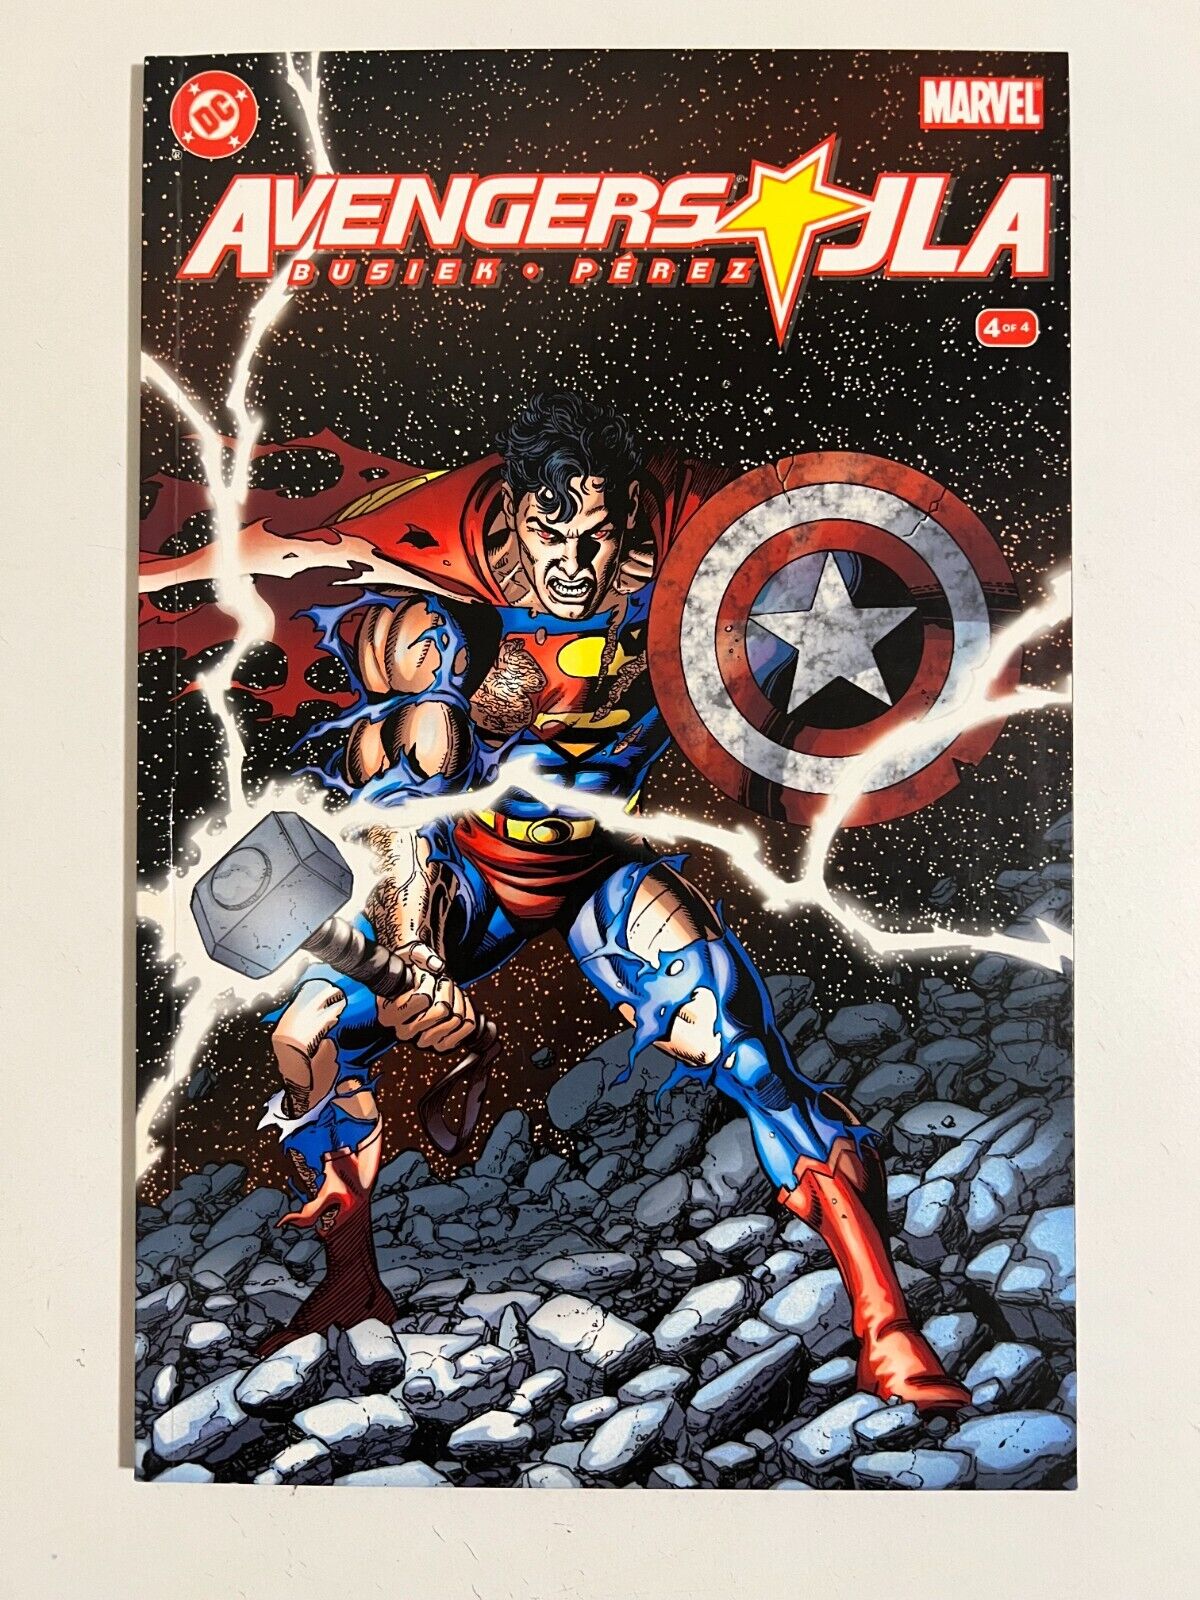 Avengers JLA #4 (VF/NM)